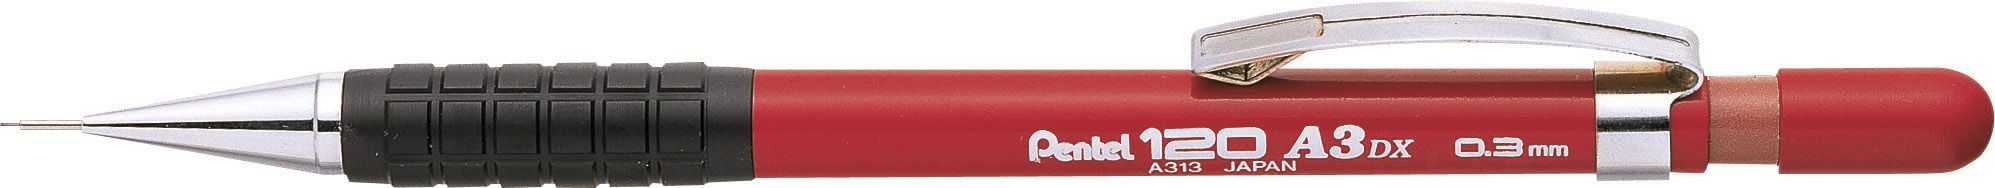 Creion mecanic Pentel A313, 0,3 mm